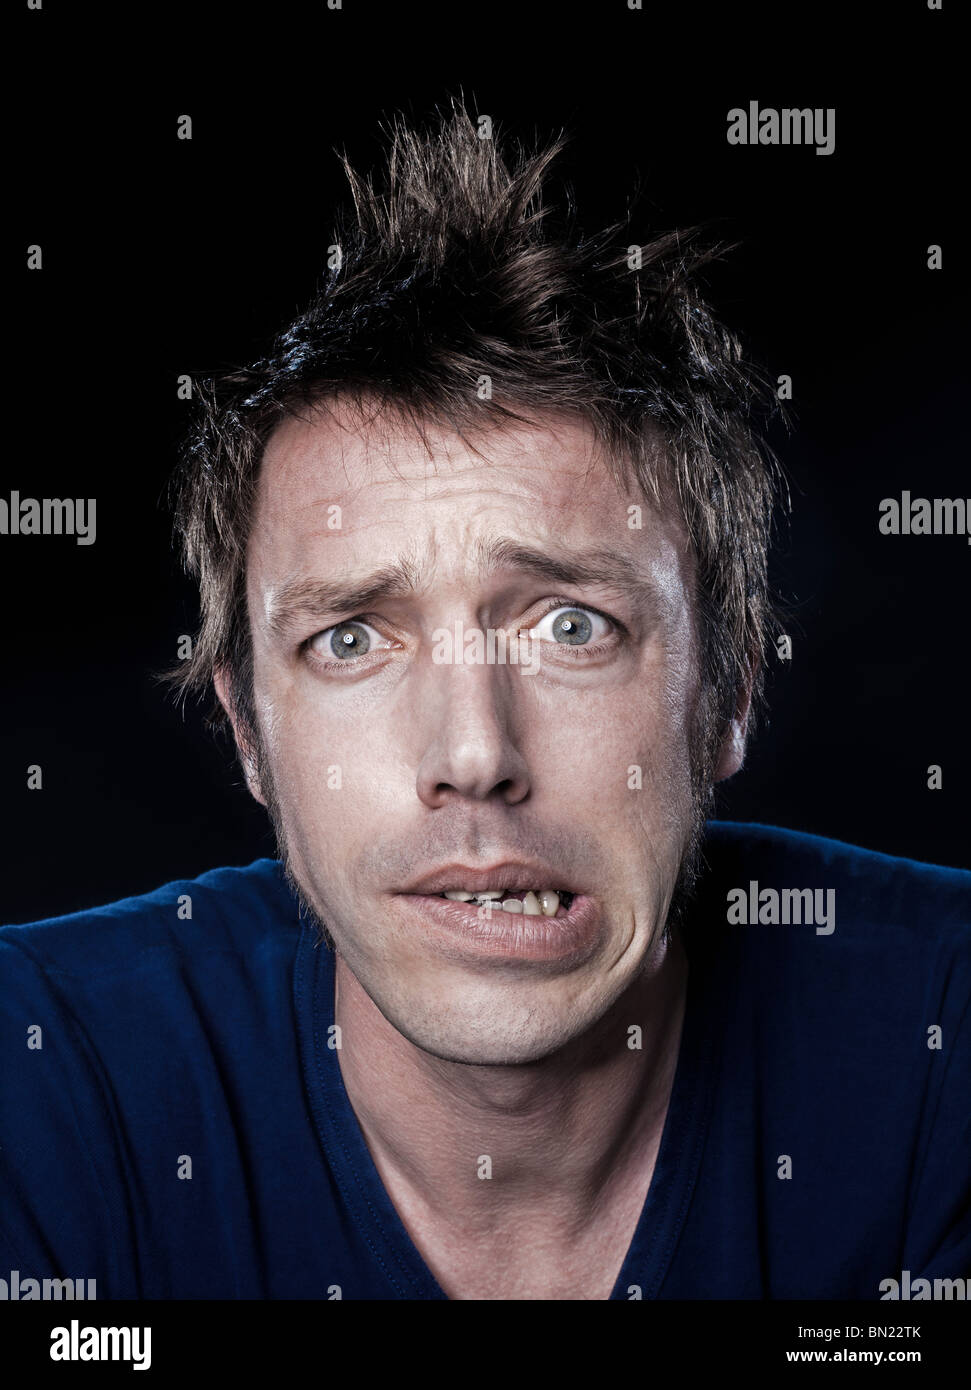 studio portrait on black background of a funny expressive caucasian man Stock Photo